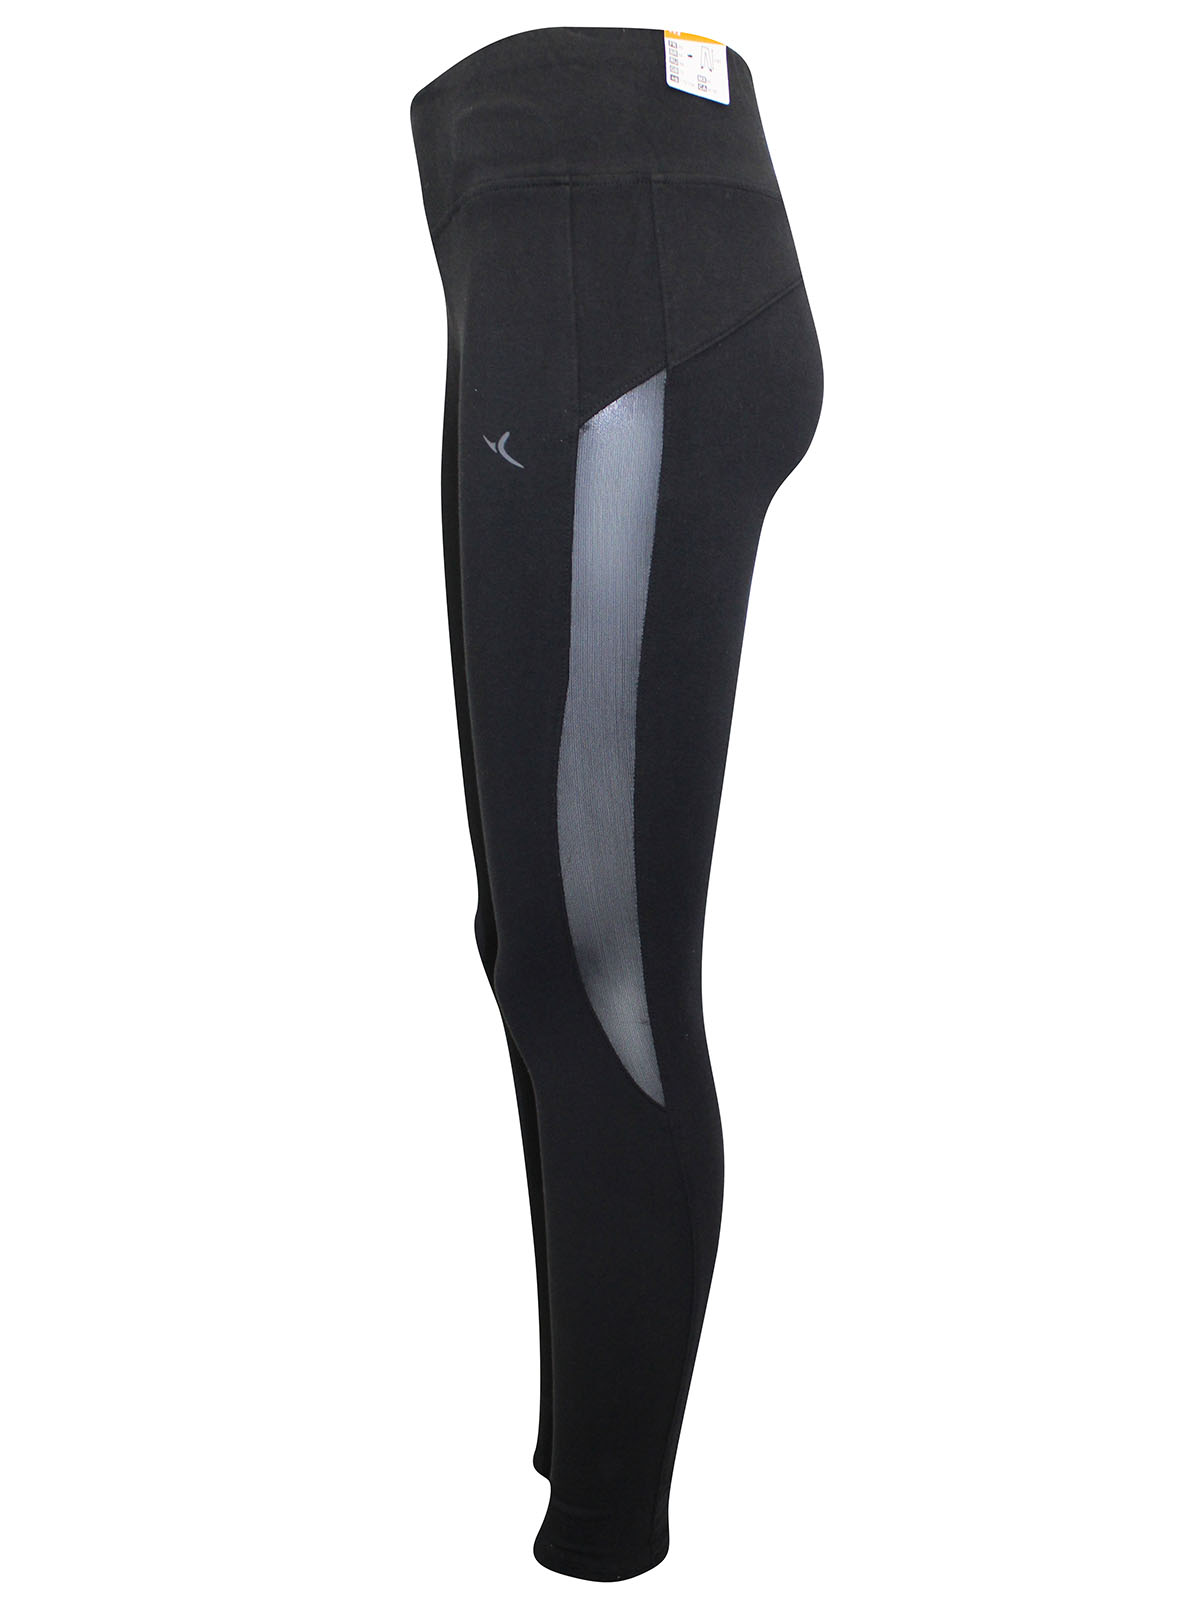 Decathlon - - BLACK Mesh Panel Gym Leggings - Plus Size 12/14 to